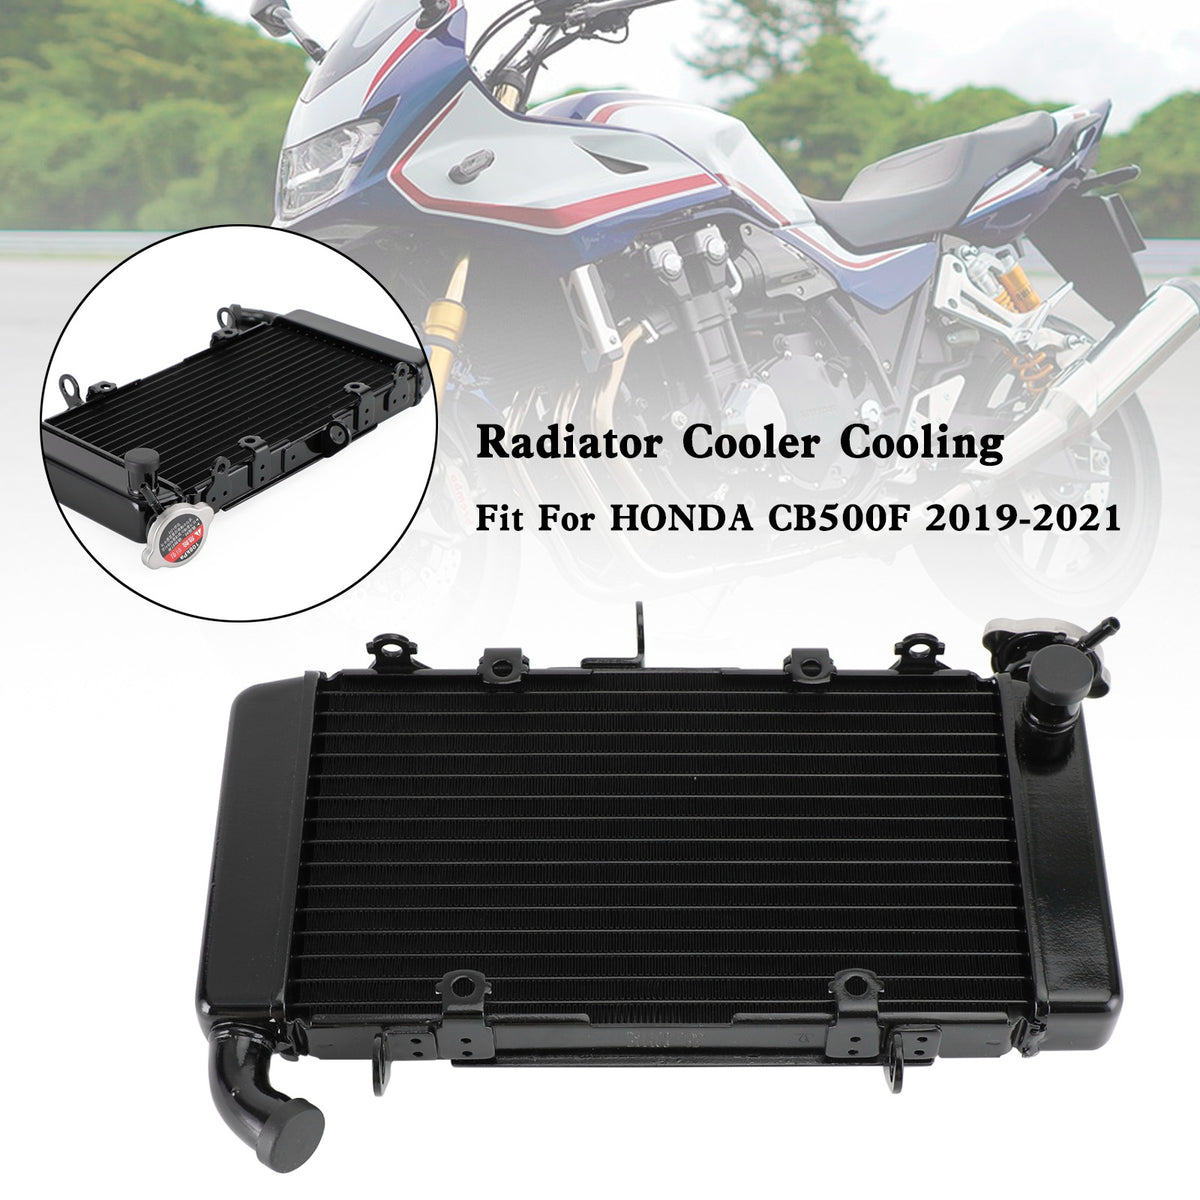 Engine Radiator Cooler Cooling Fit For HONDA CB500F CB 500 F 2019-2021